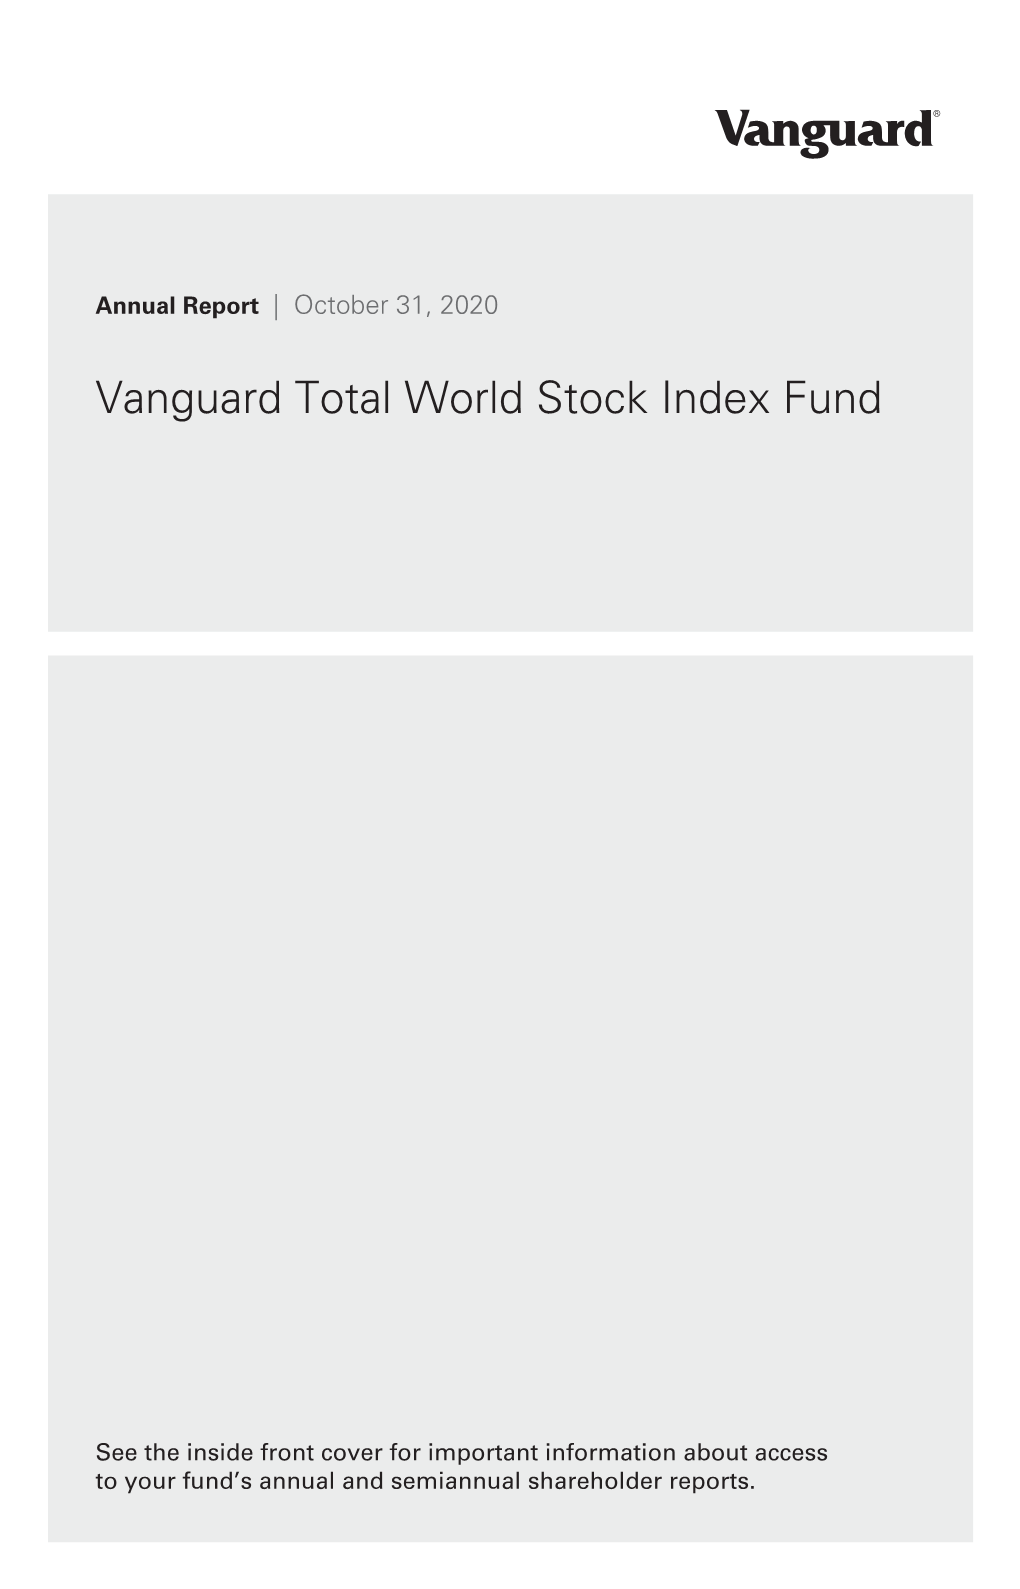 Vanguard Total World Stock Index Fund